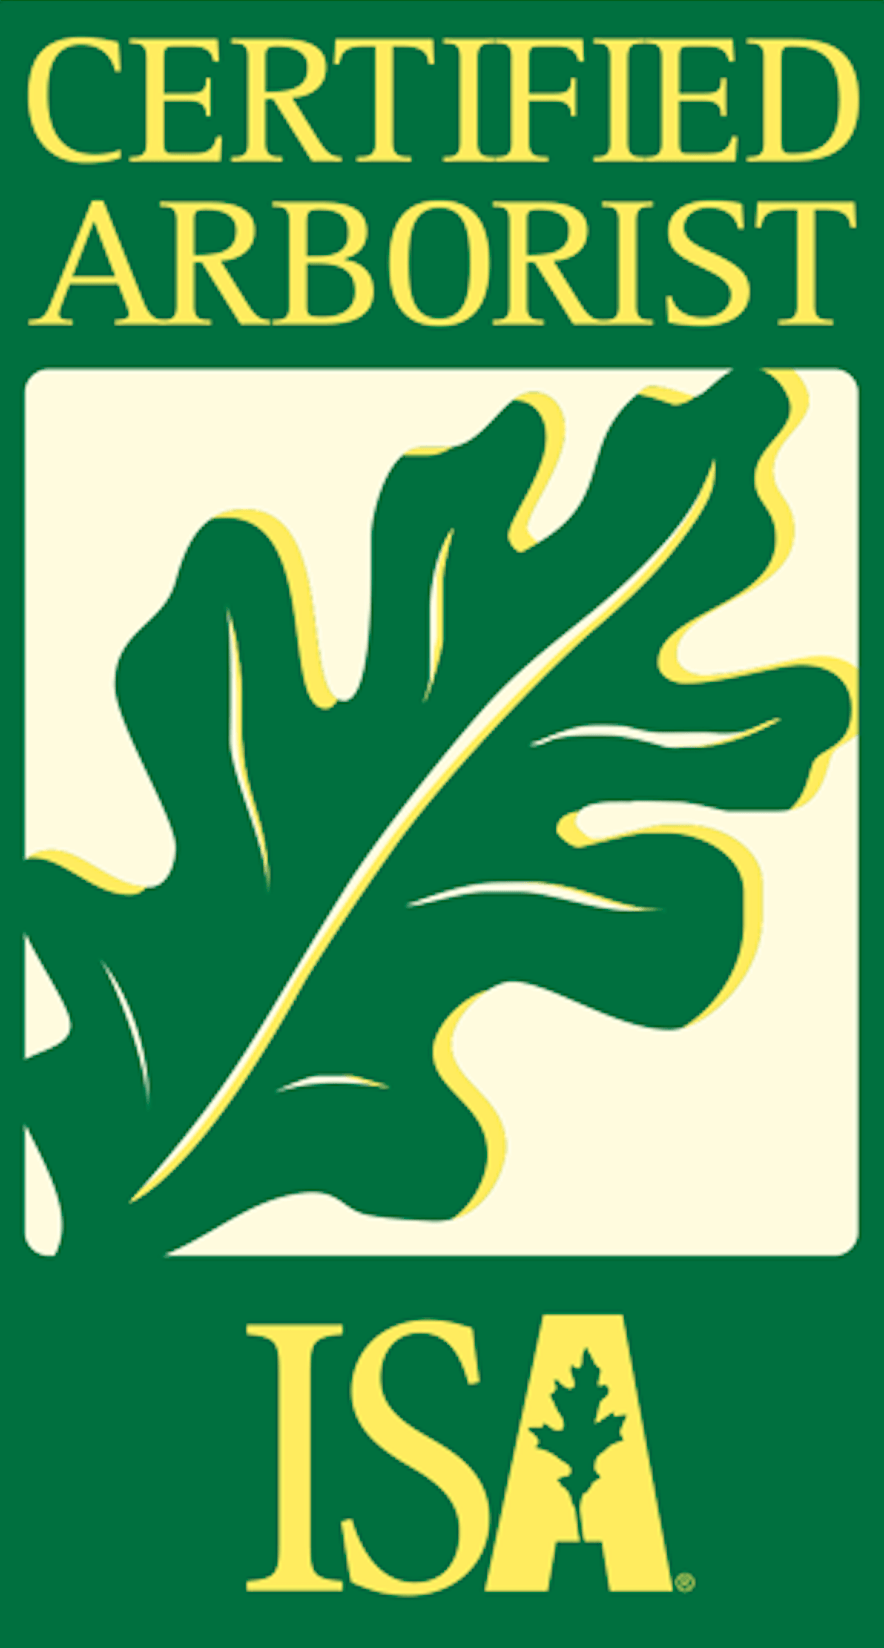 Certified Arborist Chattanooga, TN